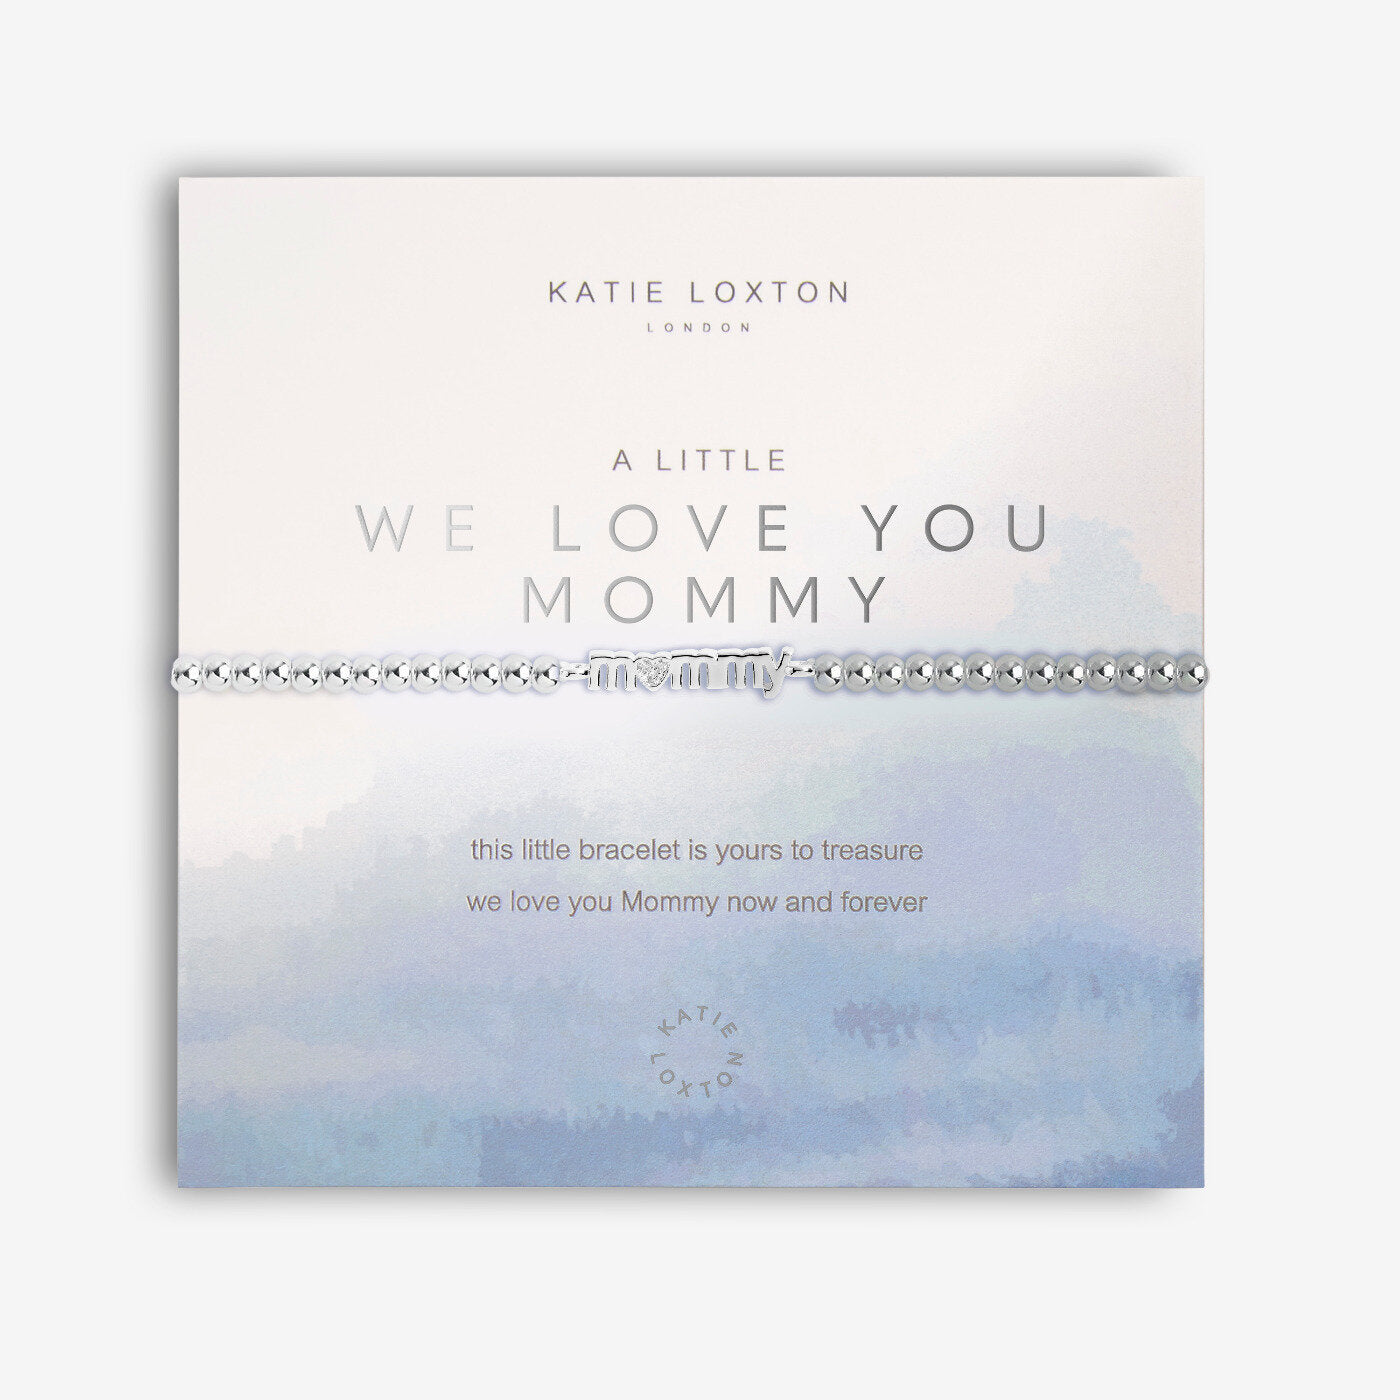 Katie Loxton A Little 'We Love You Mommy' Bracelet